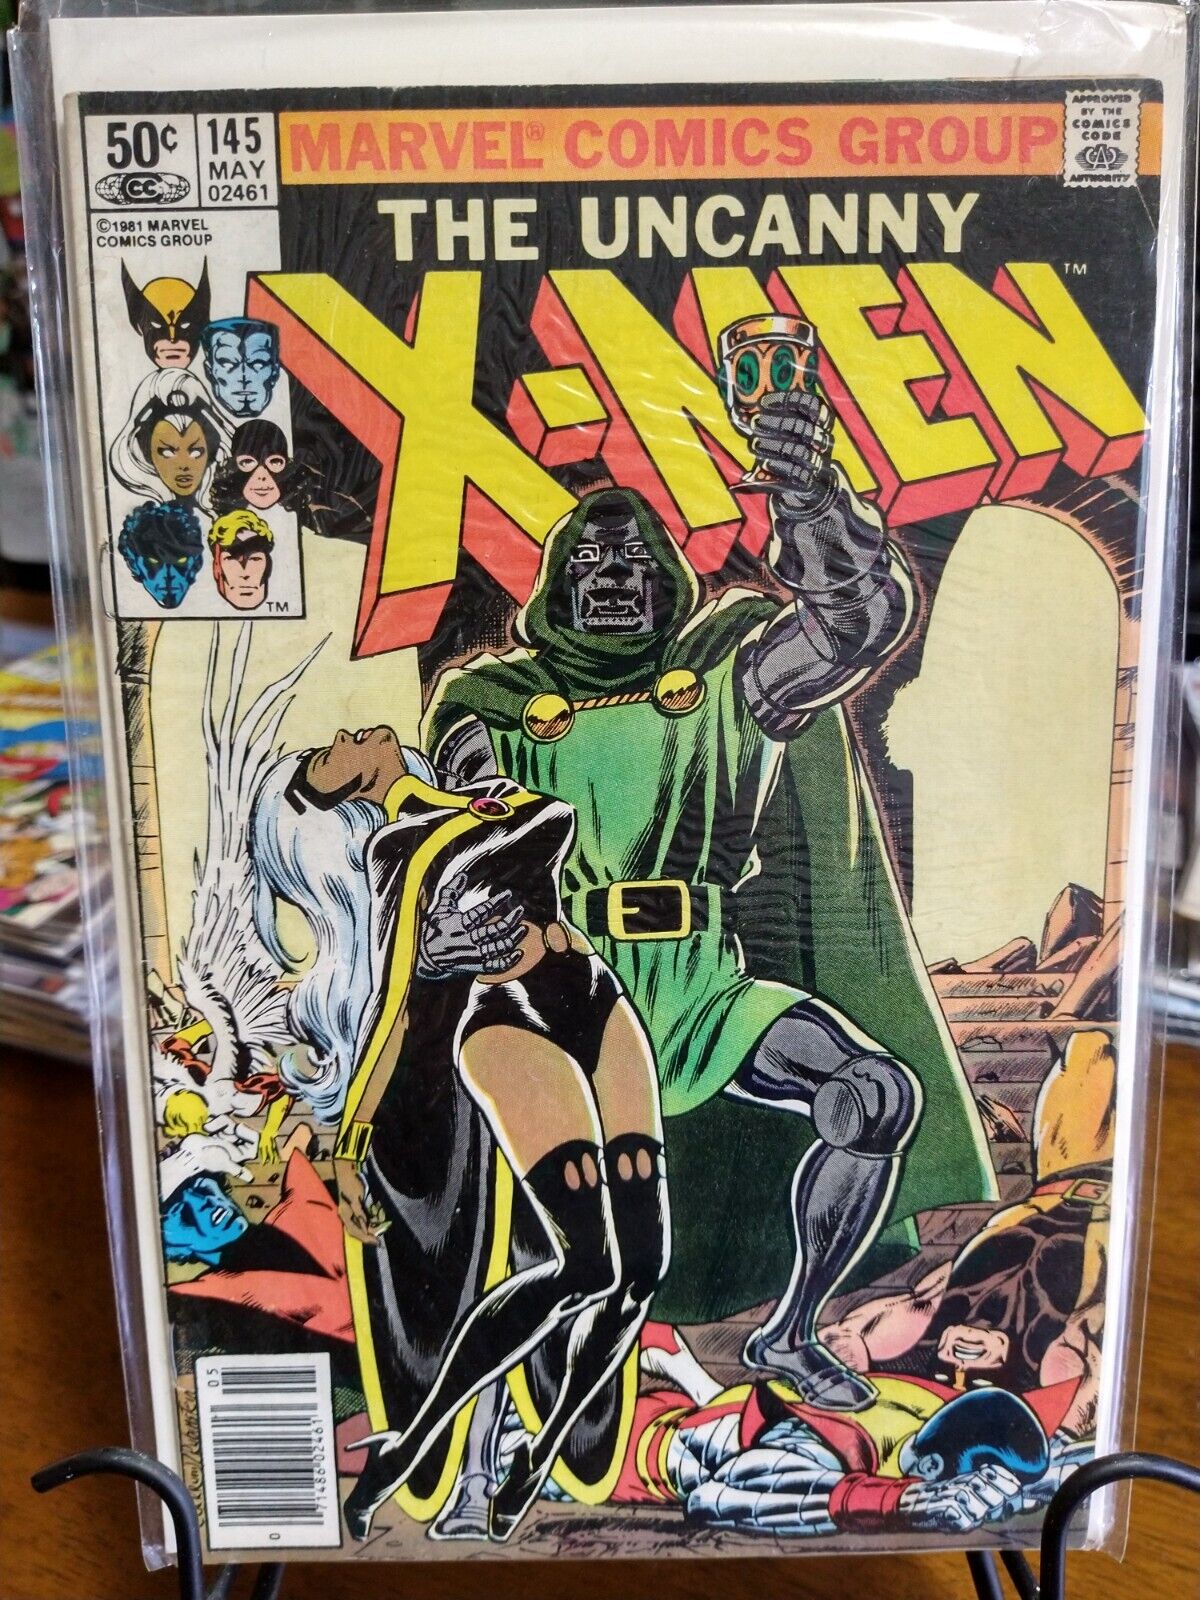 Uncanny X-Men 145 - Doom - Newsstand - VG/FN - Marvel 1981